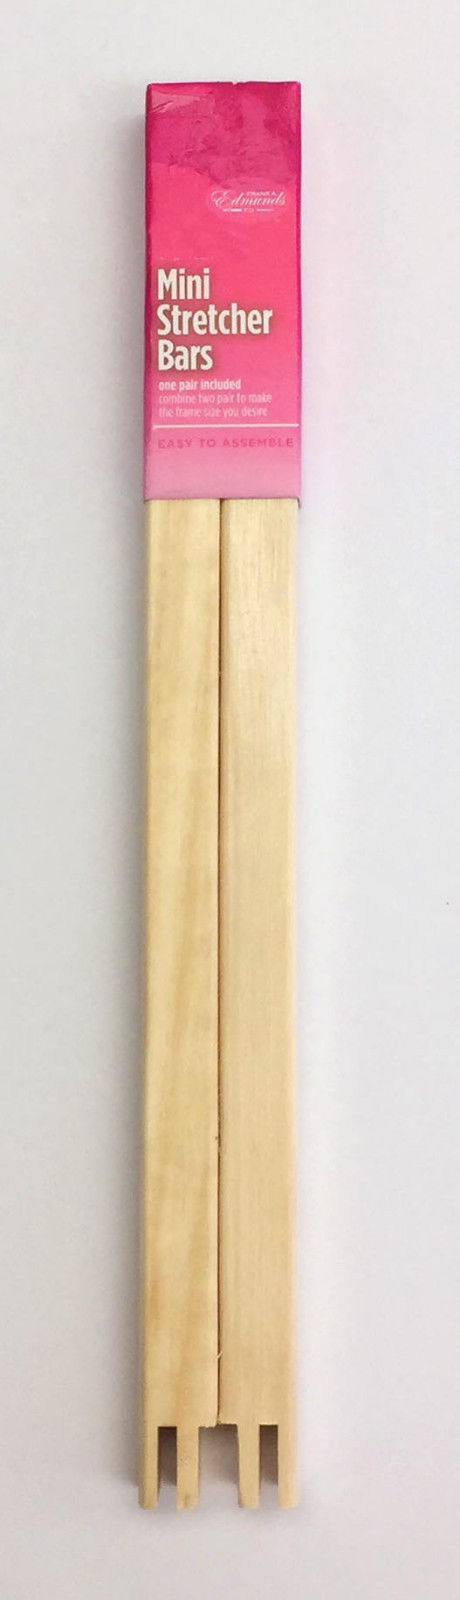 Needlepoint Stretcher Bars - 18 Standard Size Stretcher Bars 1 pair